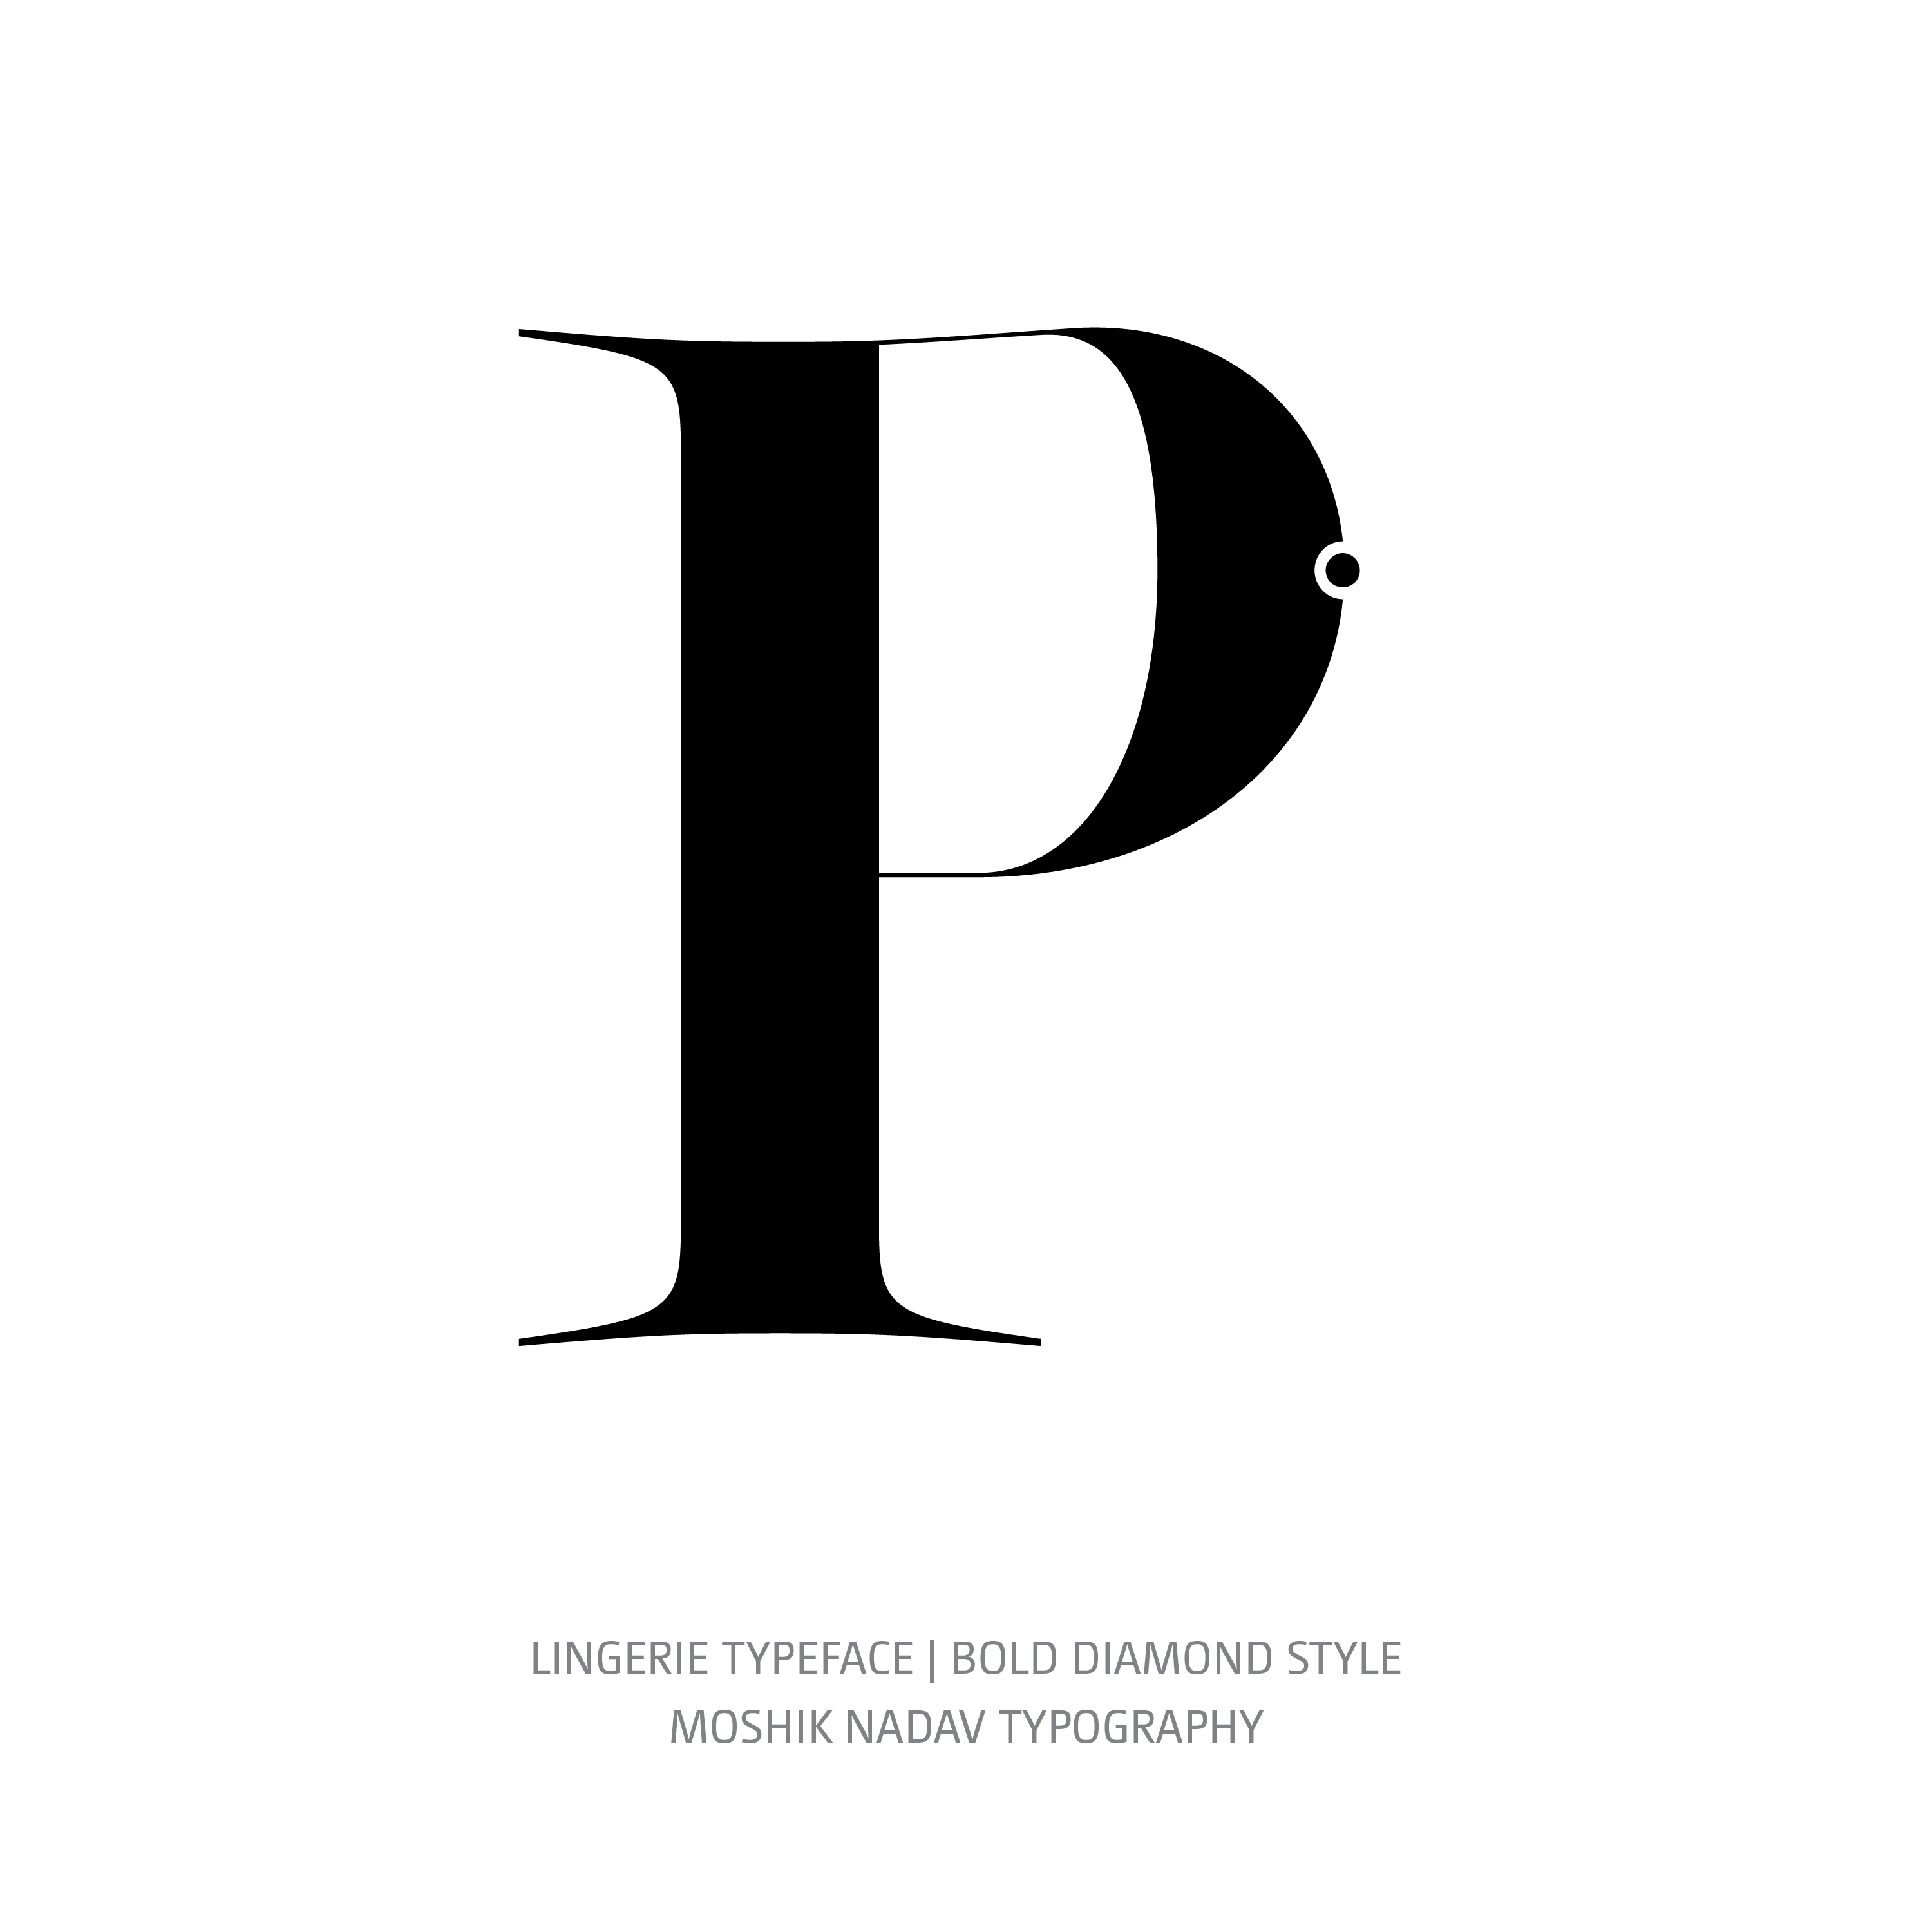 Lingerie Typeface Bold Diamond P